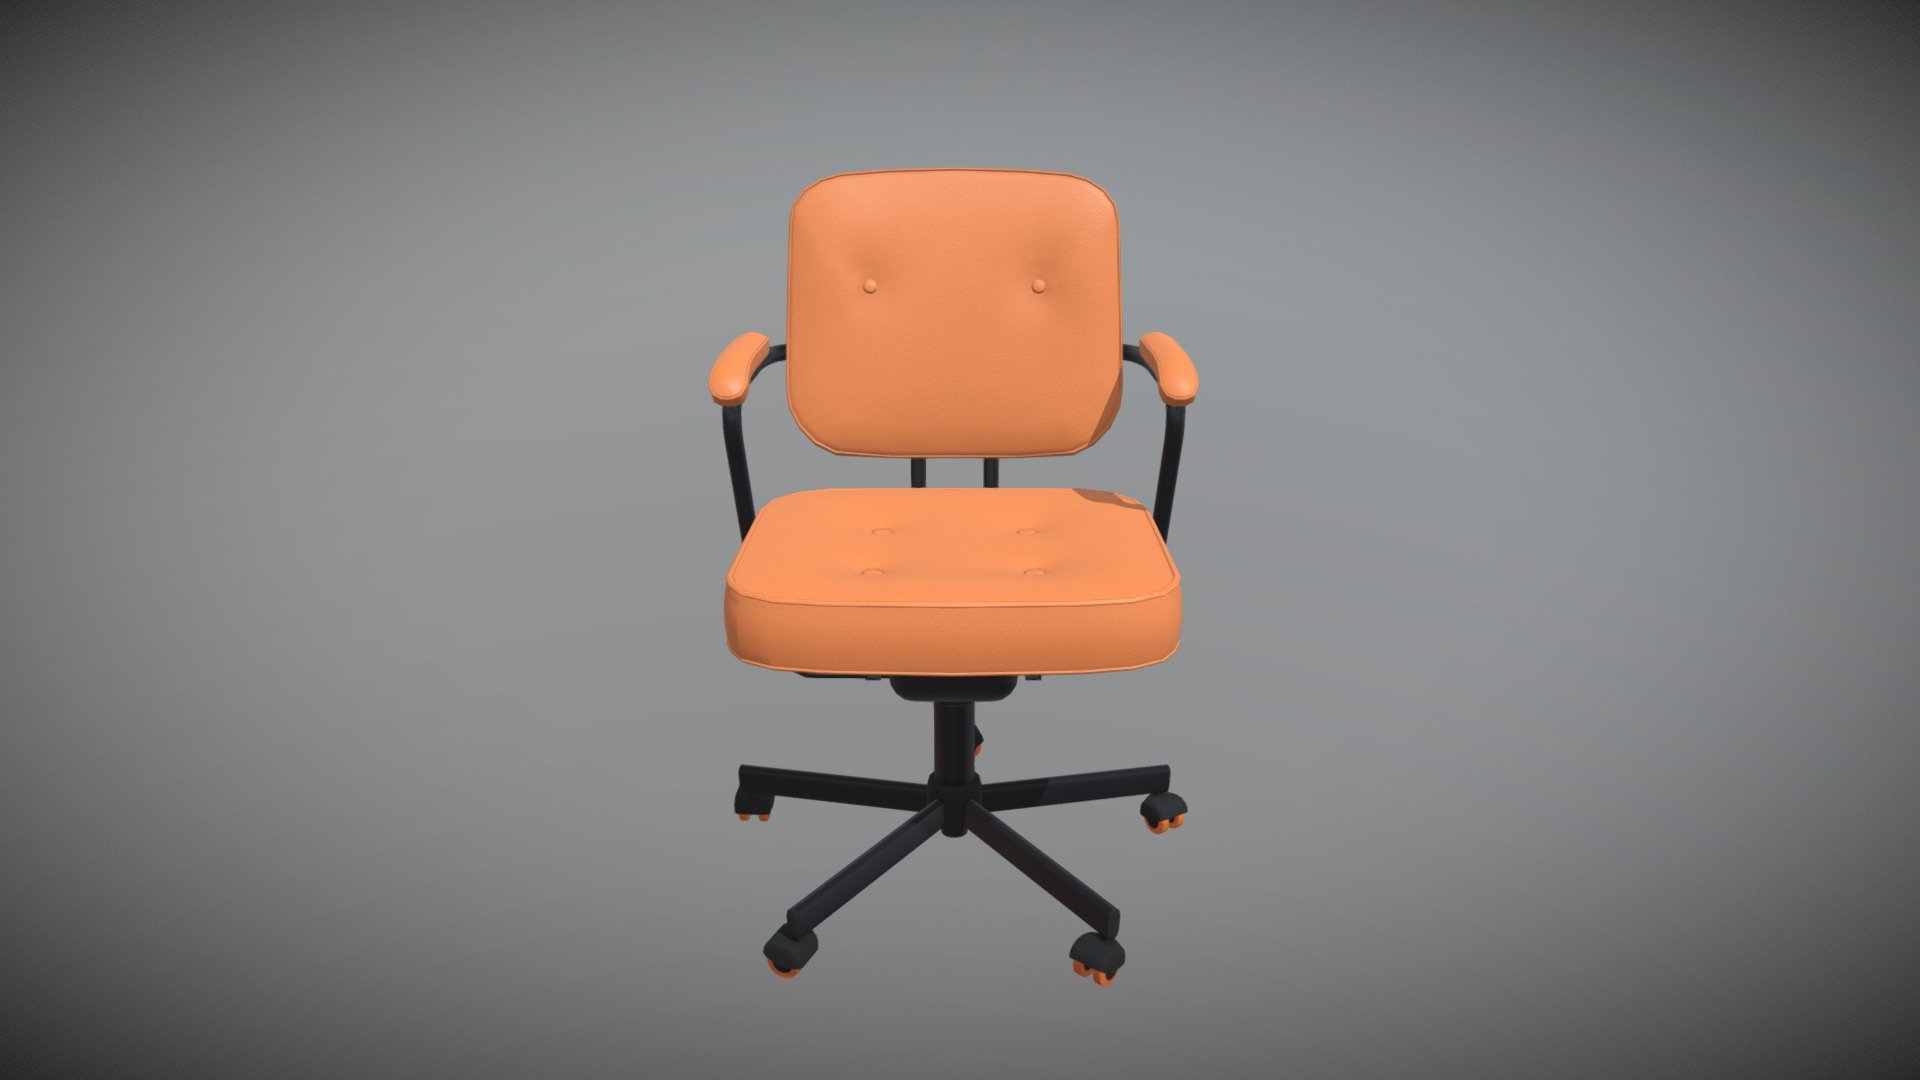 Alefjall Ikea Office Chair 3d Model By Ernest Jones Bitancor Ernestjones Cb0c05a Sketchfab